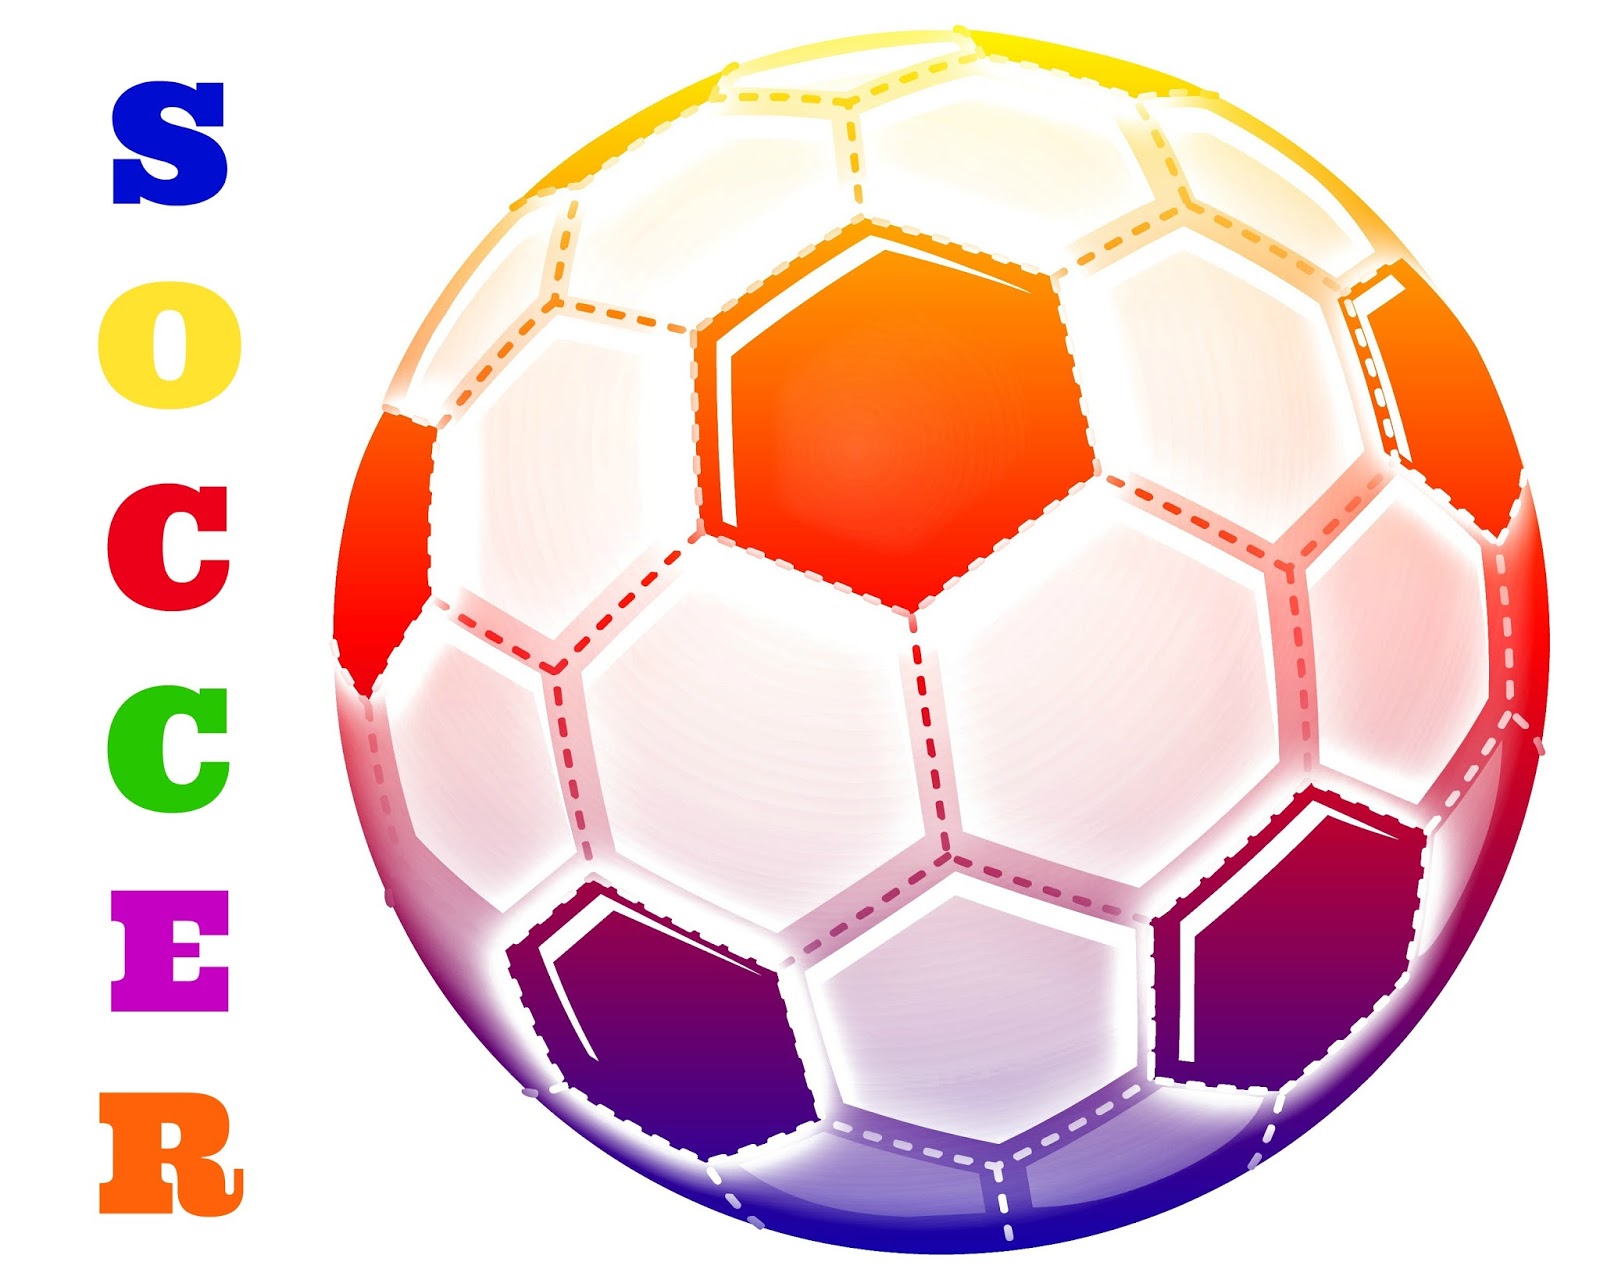 cjo-photo-printable-sports-art-8x10-colorful-soccer-ball